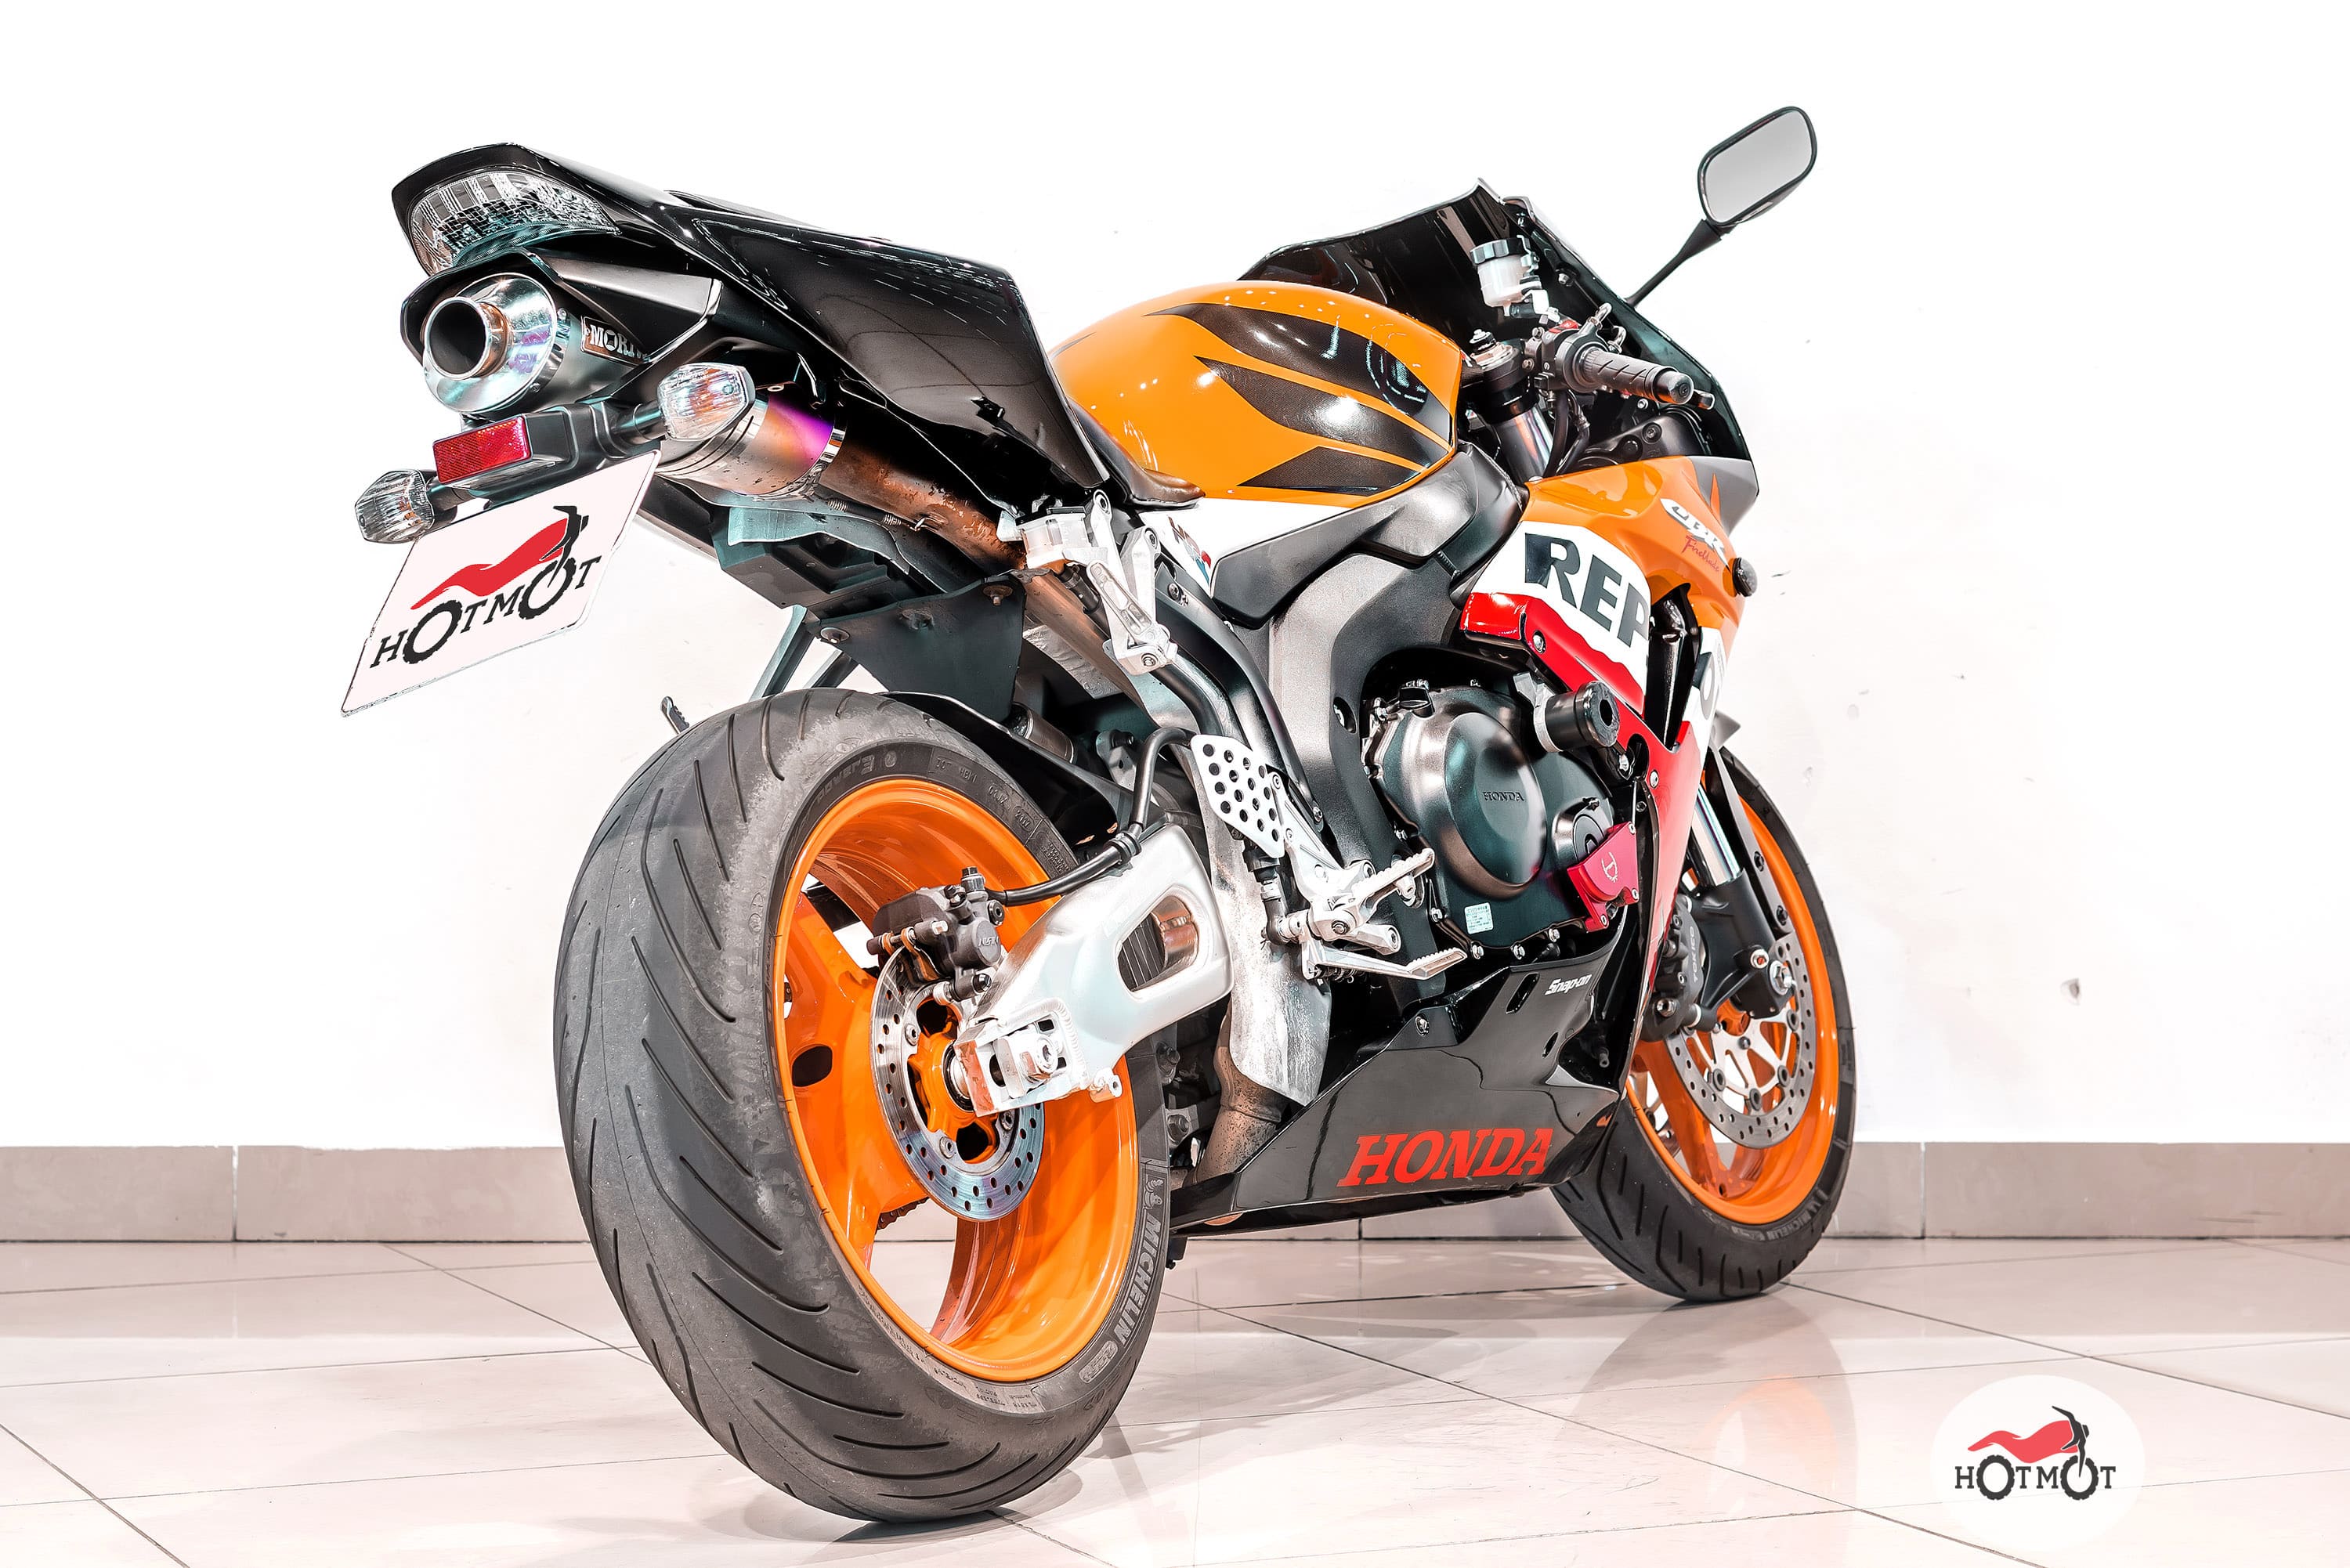 Мотоцикл Mobicaro 1:12 Honda CBR 1000 RR-R Fireblade 644102